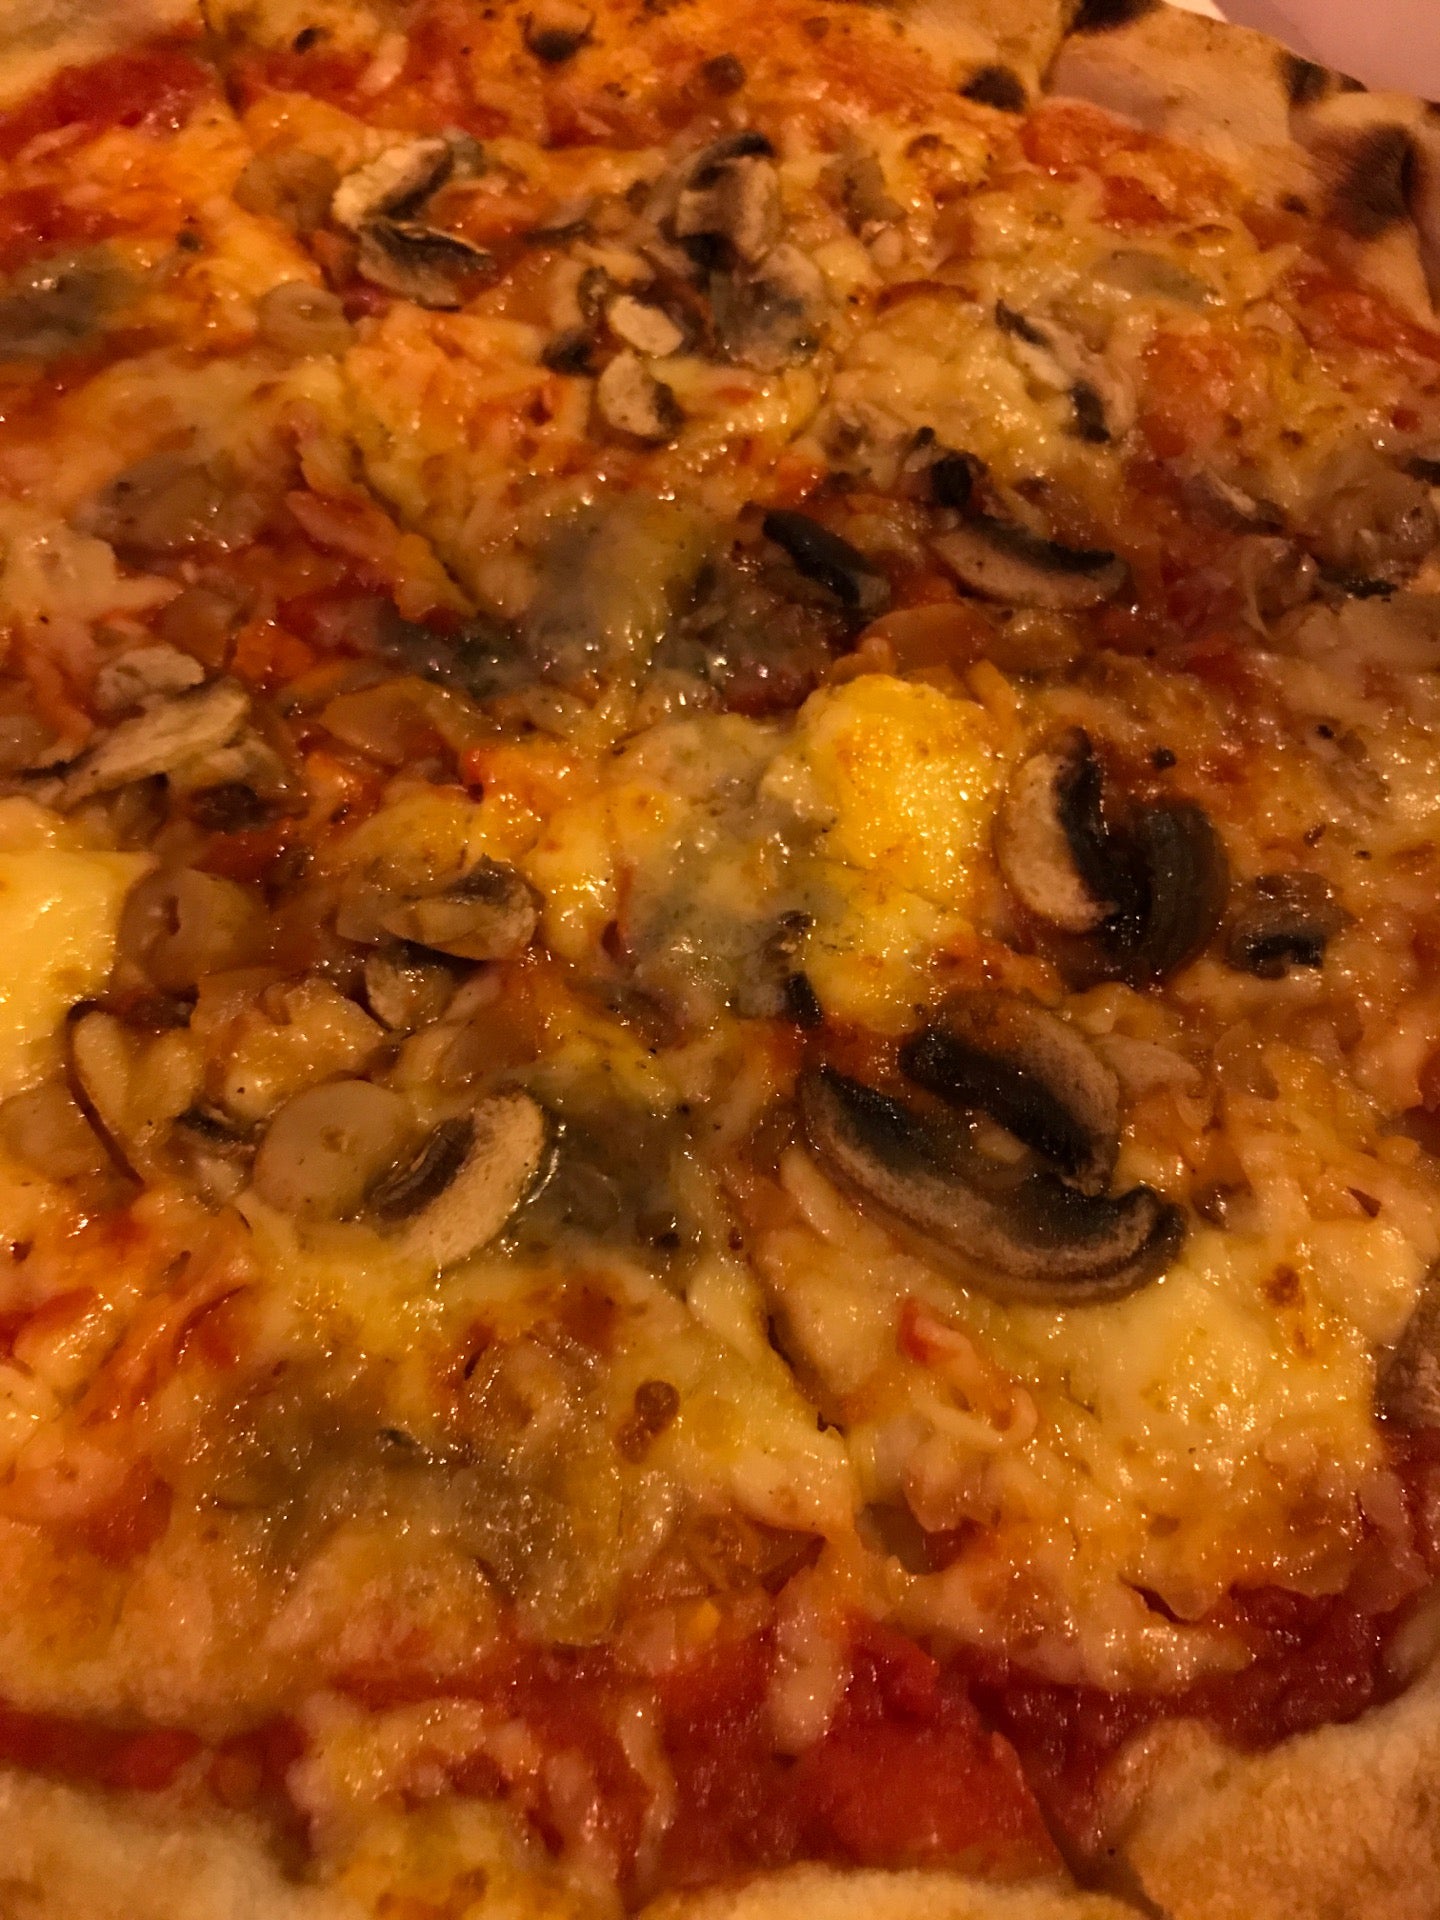 Pizza Oliva